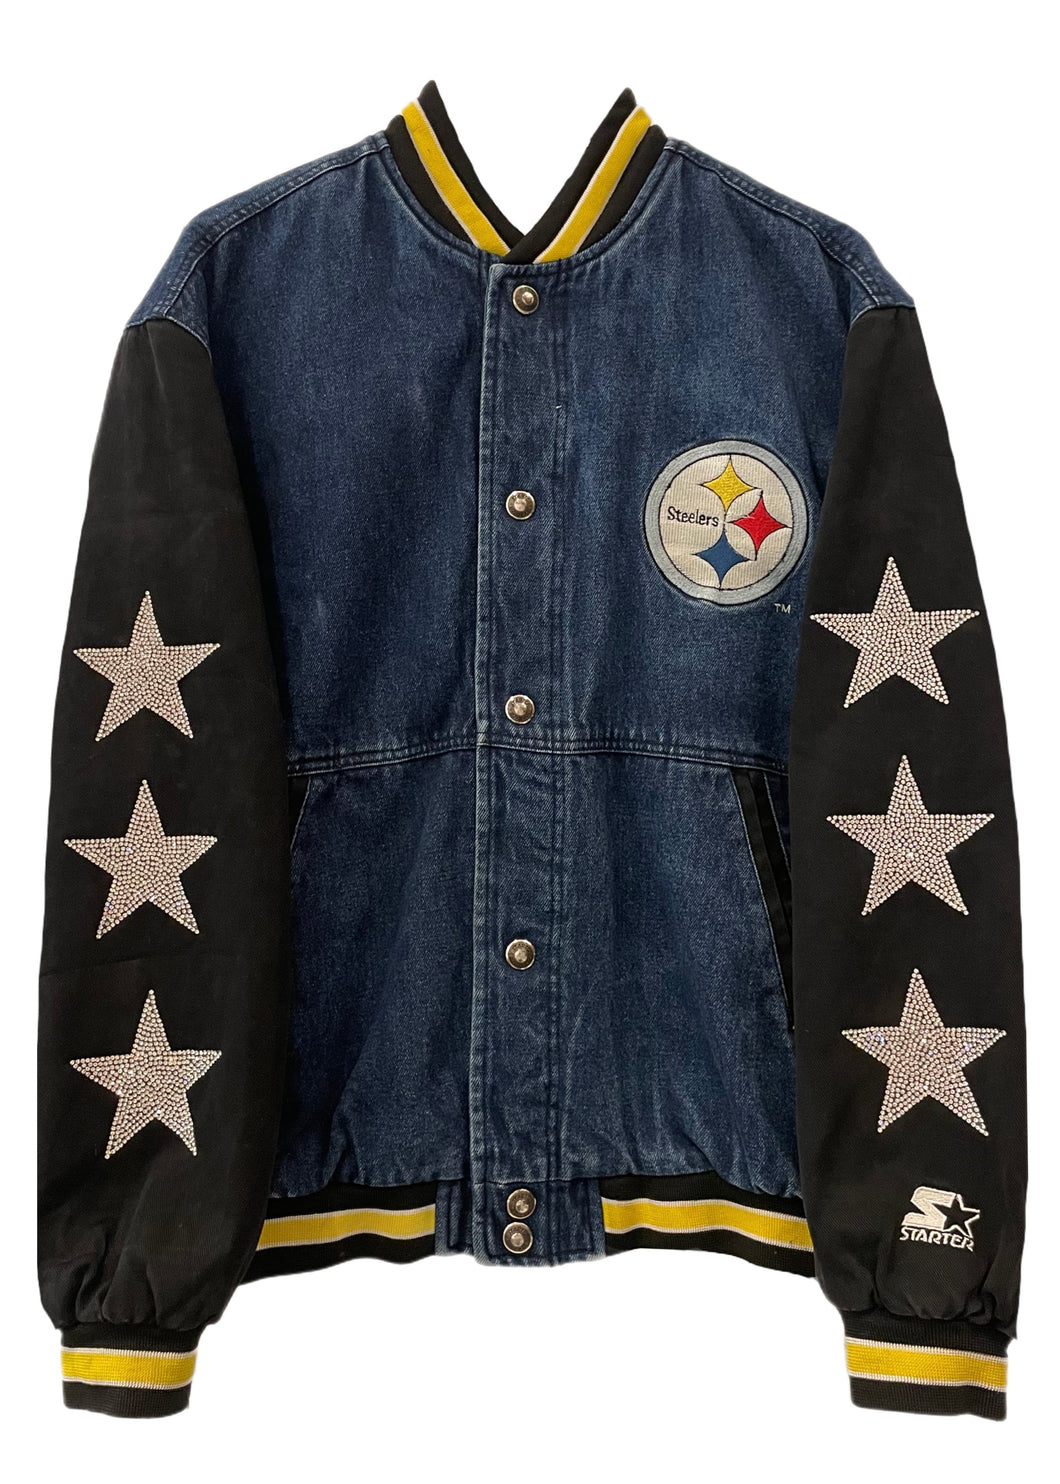 Pittsburgh Steelers, NFL “Super Rare Find” One of a KIND Vintage Denim Jacket with Three Crystal Star Design